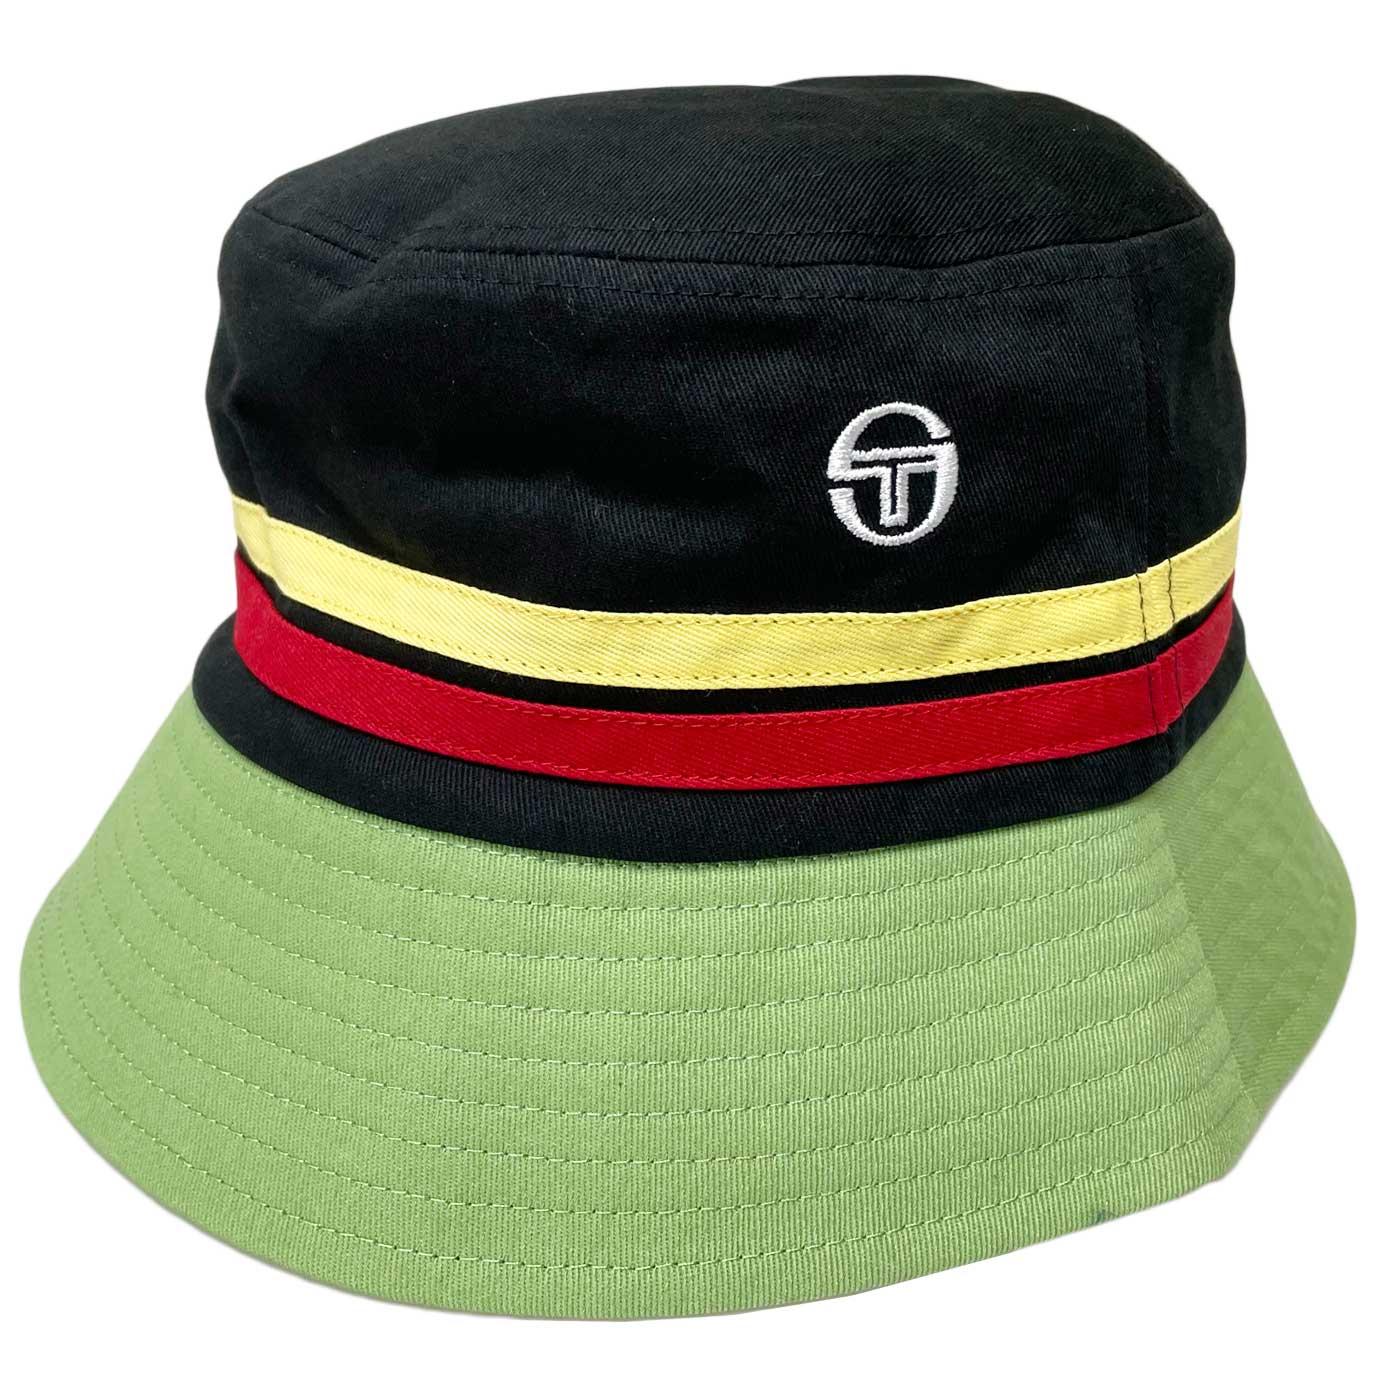 Stonewoods Sergio Tacchini Retro 90s Bucket Hat B